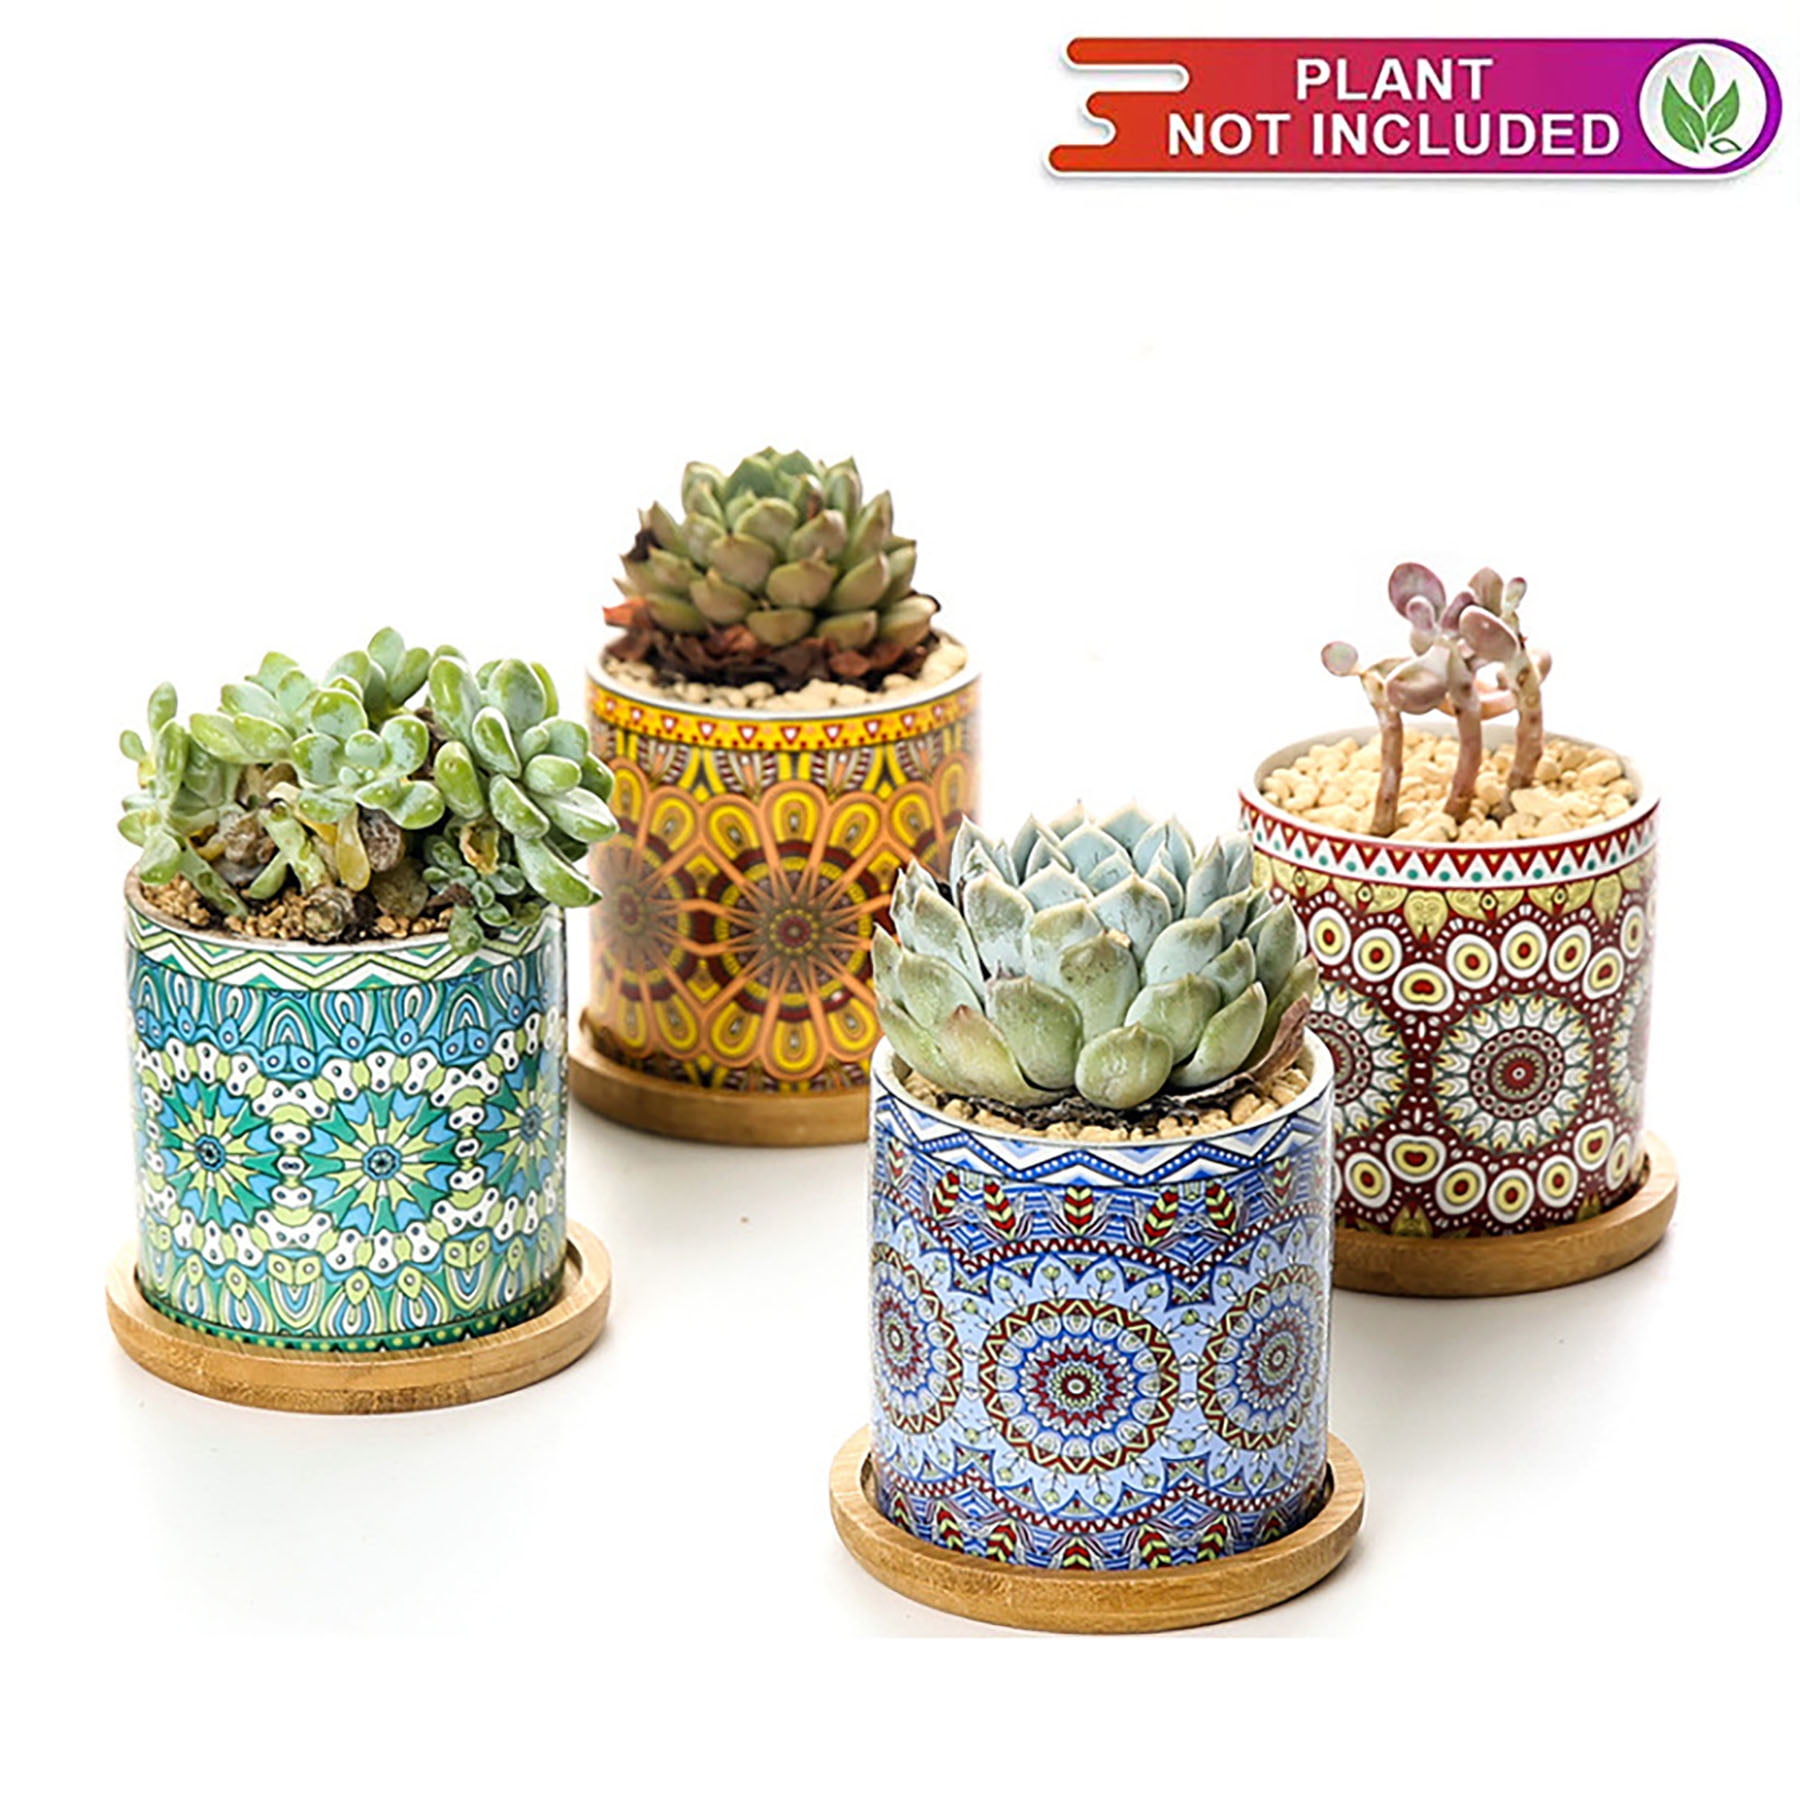 Succulent Pots 3" Cylindrical Mandalas Ceramic Planter w/ Drainage Hole Set of 4 